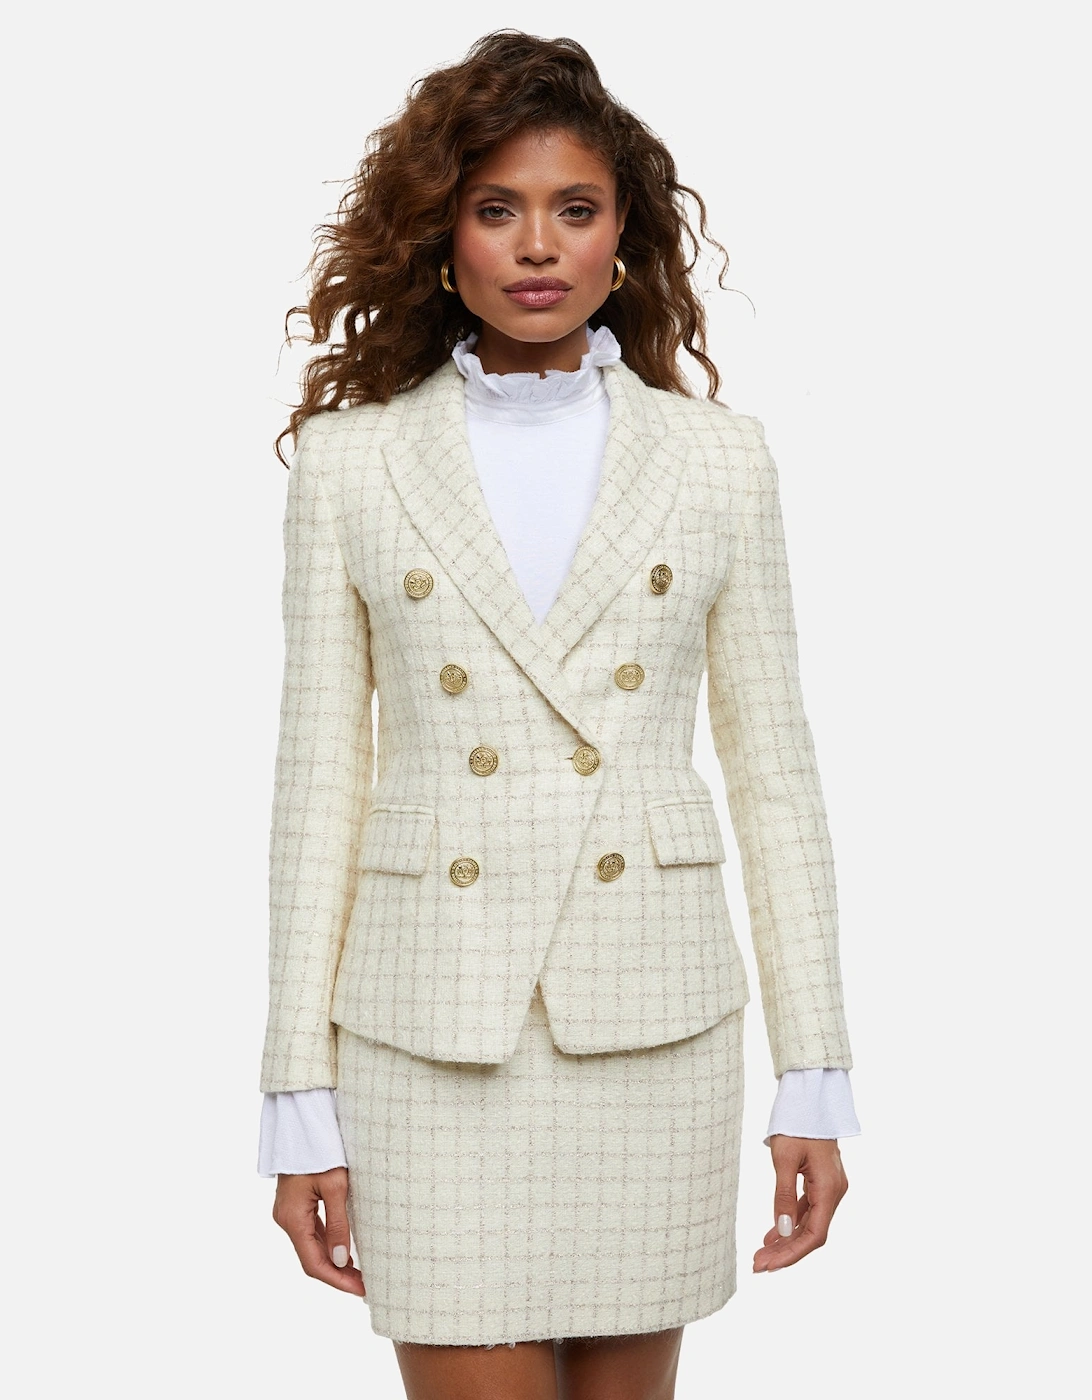 Knightsbridge Sparkle Tweed Ivory Blazer